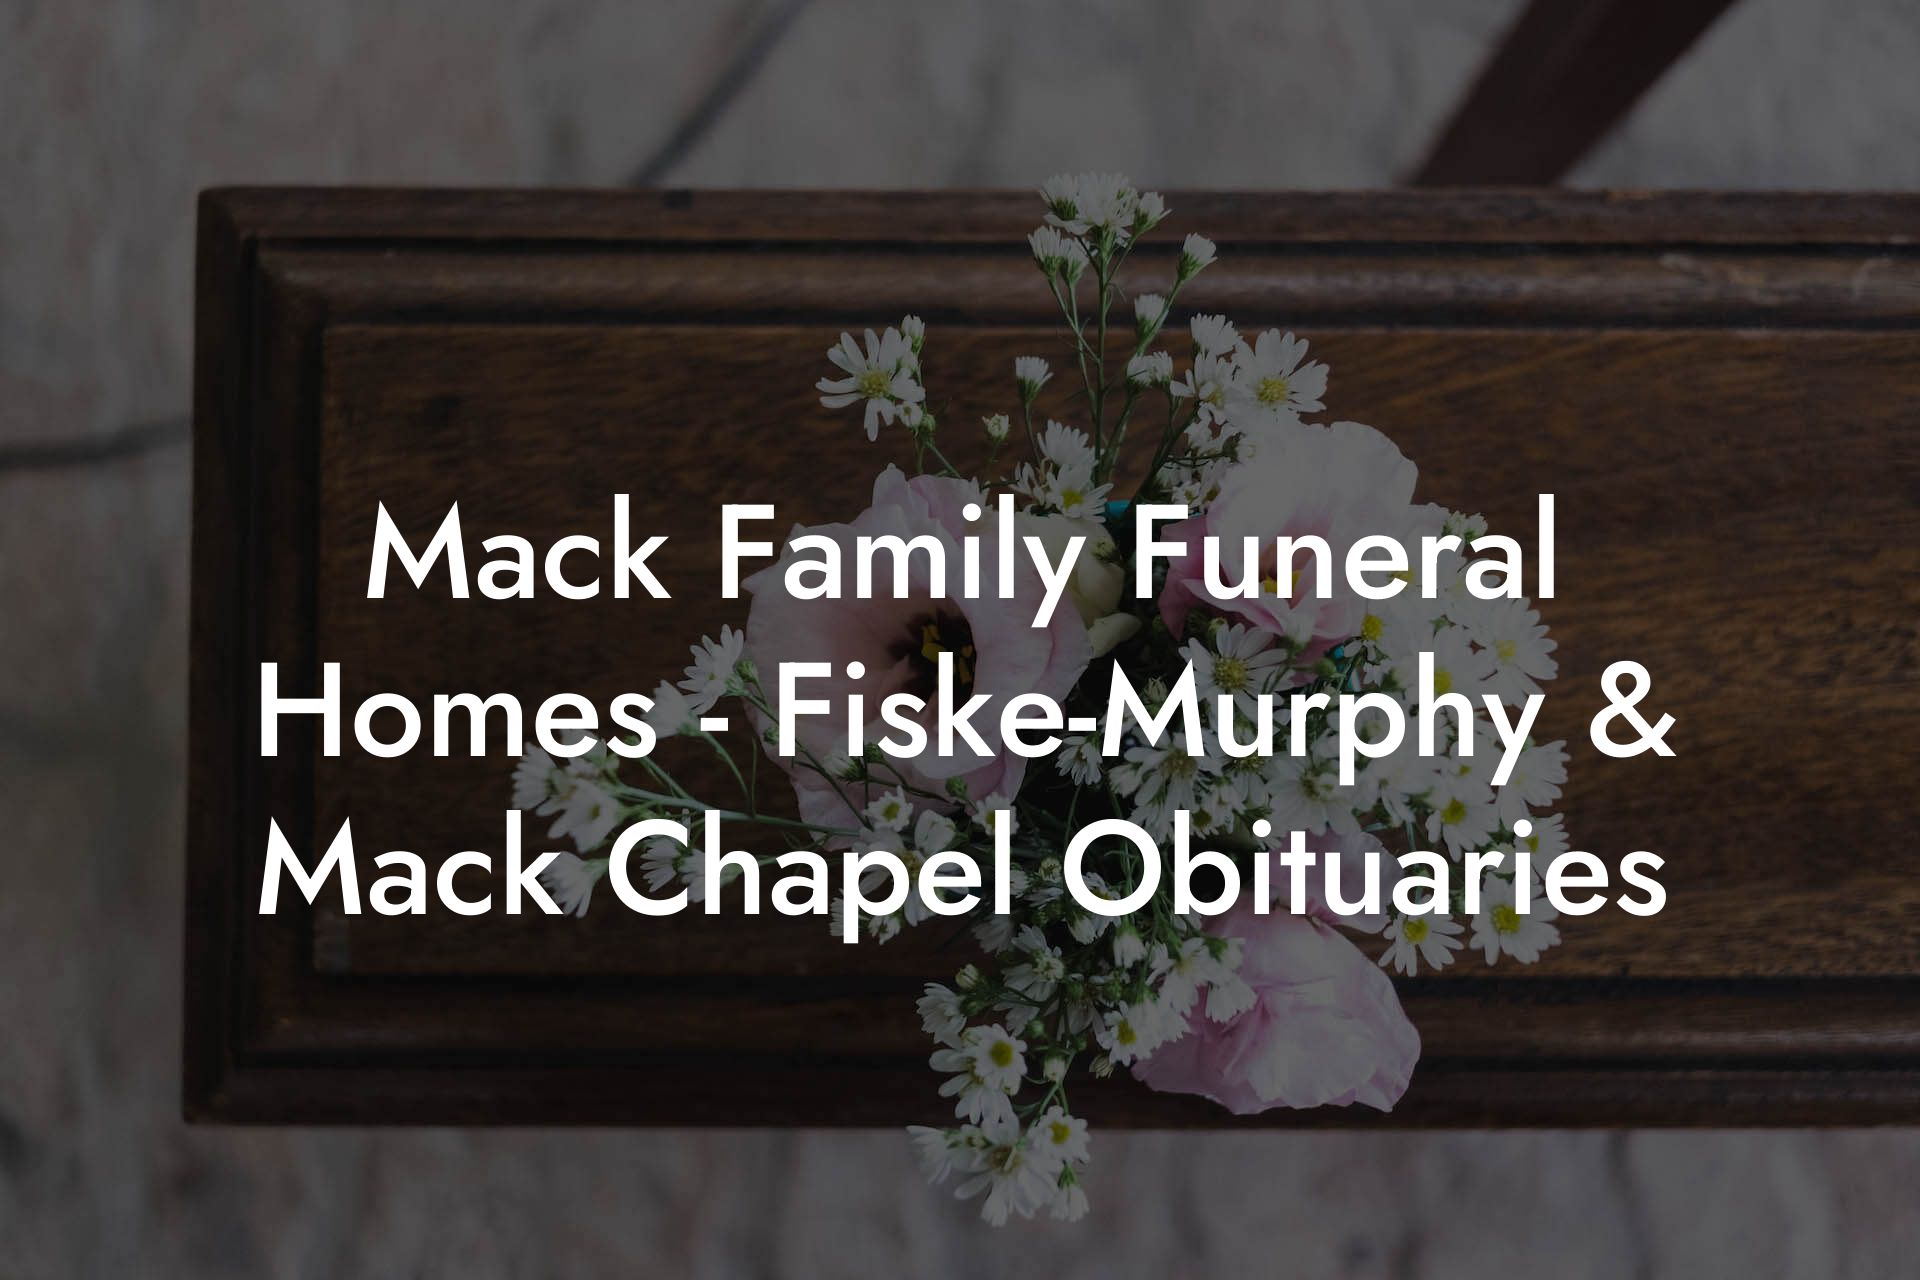 Mack Family Funeral Homes - Fiske-Murphy & Mack Chapel Obituaries